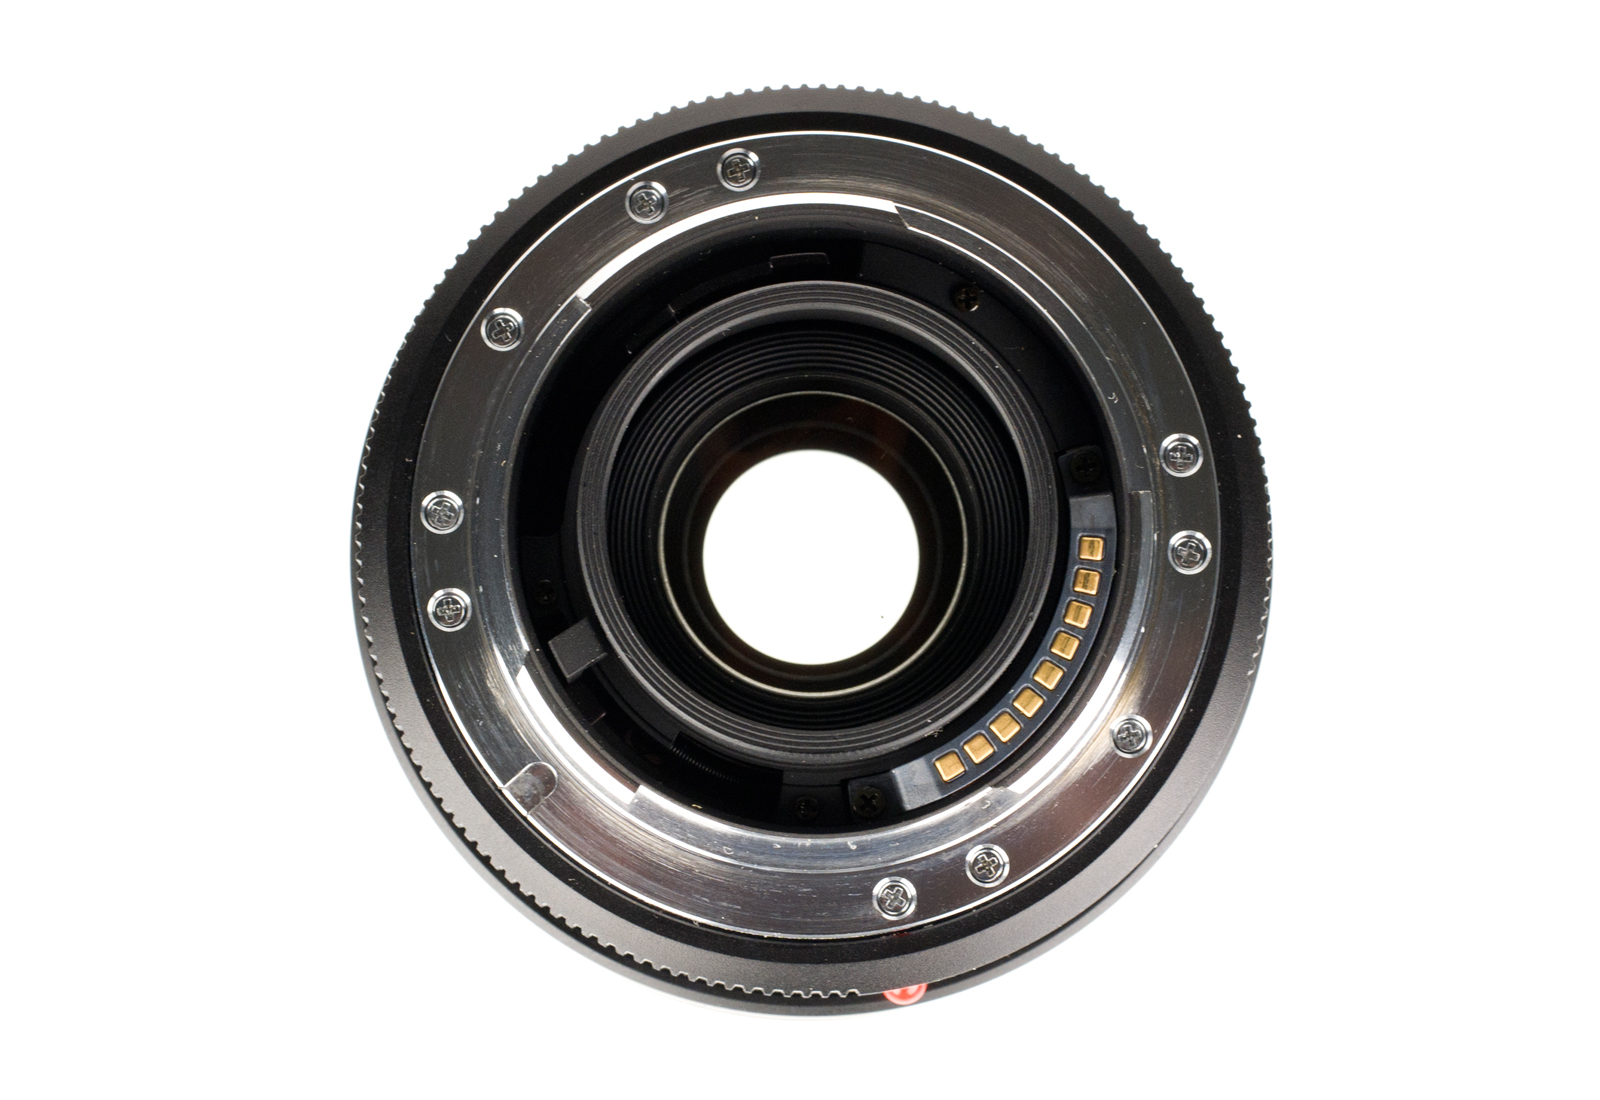 Leica Vario-Elmar-R 1:3,5-4,5/28-70mm ROM, schwarz 11364